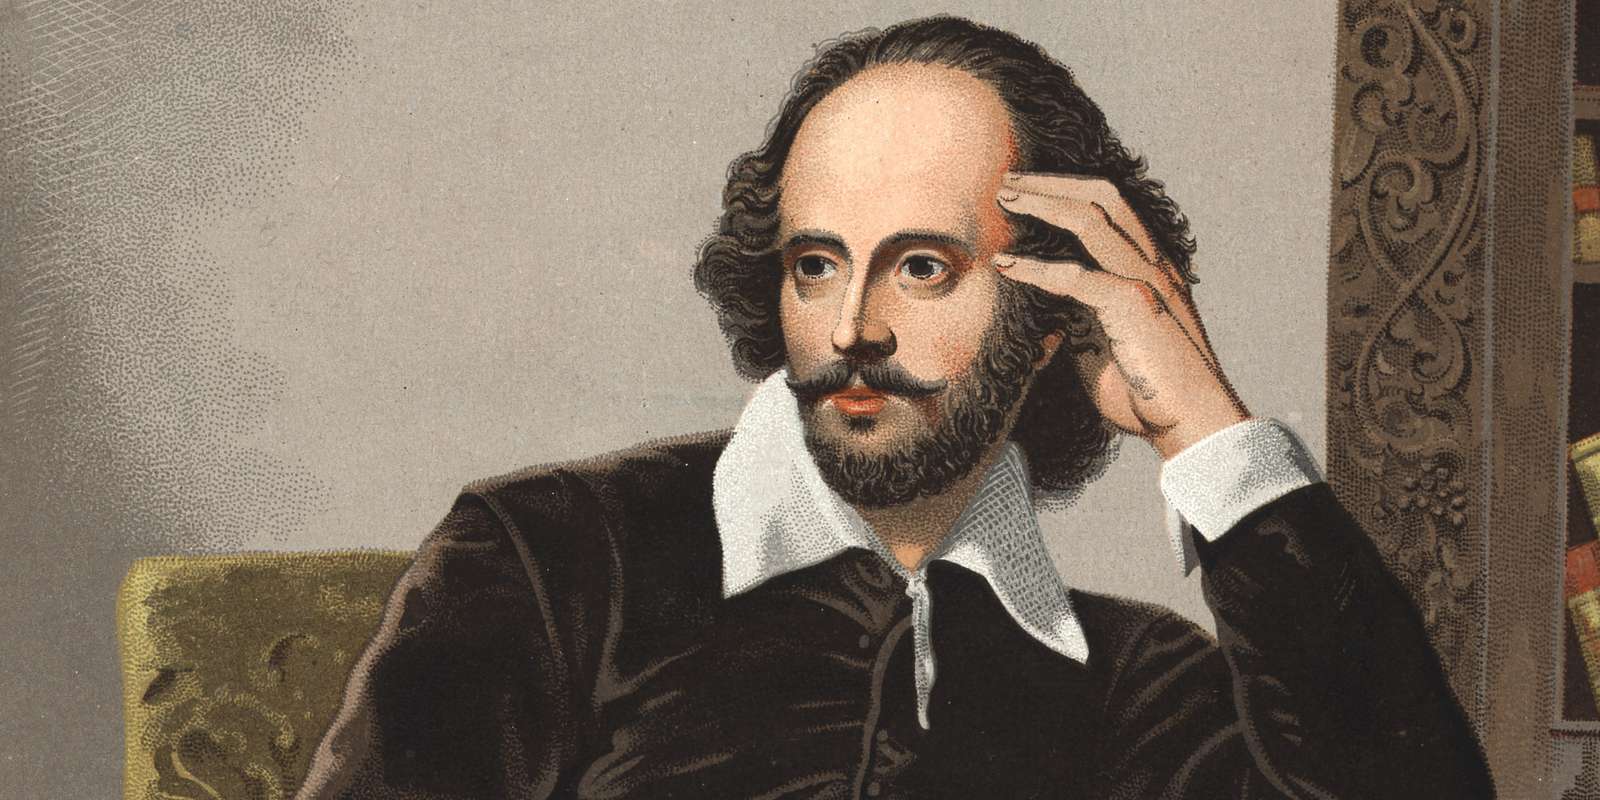 William Shakespeare rompecabezas en línea